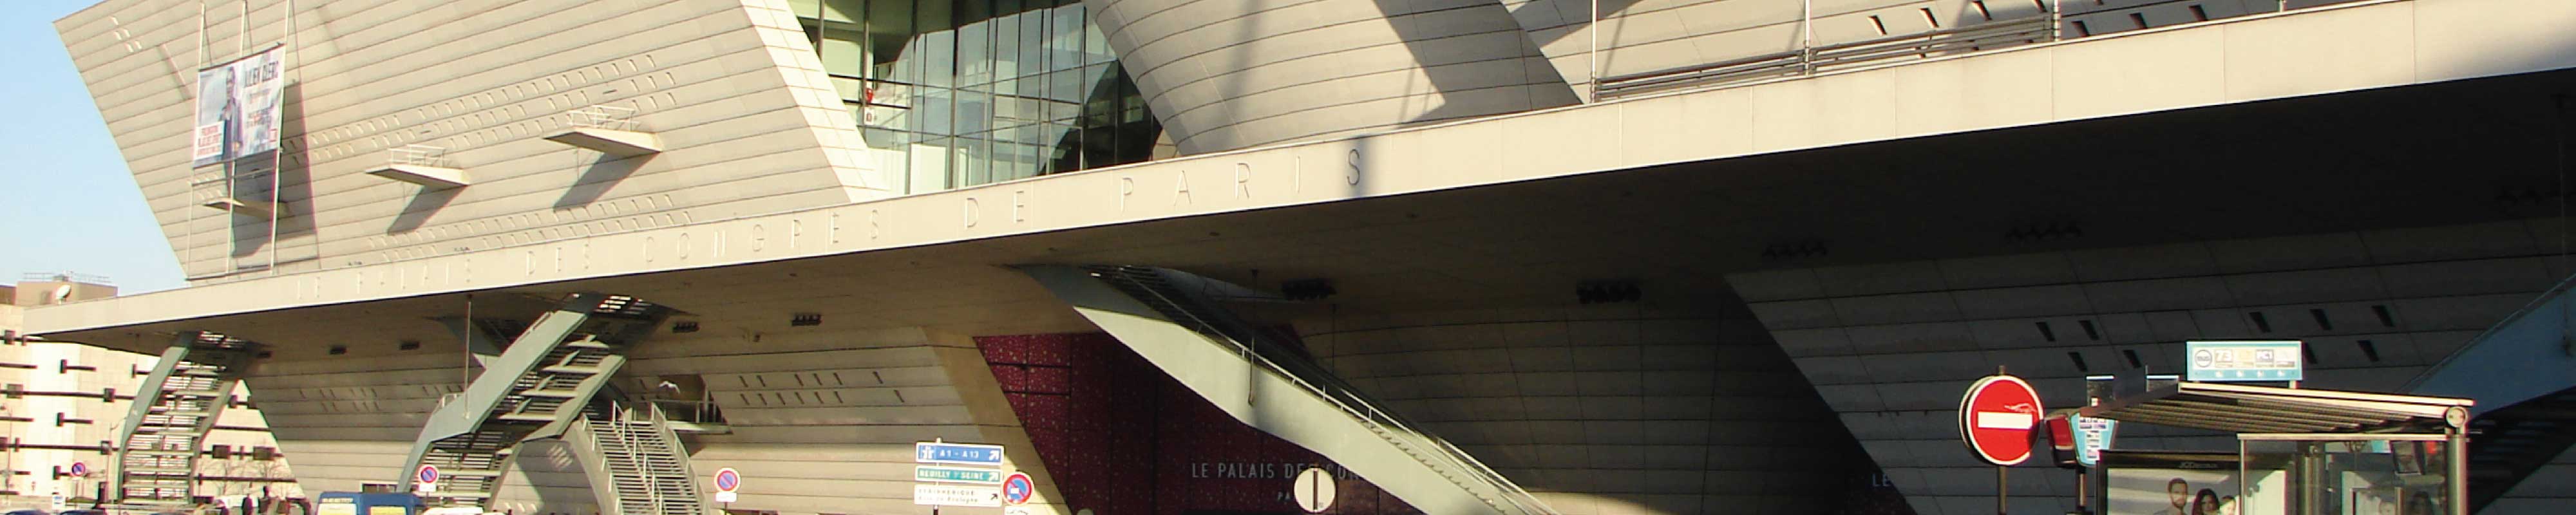 Deposito Bagagli | Palais des congrès a Parigi - Nannybag